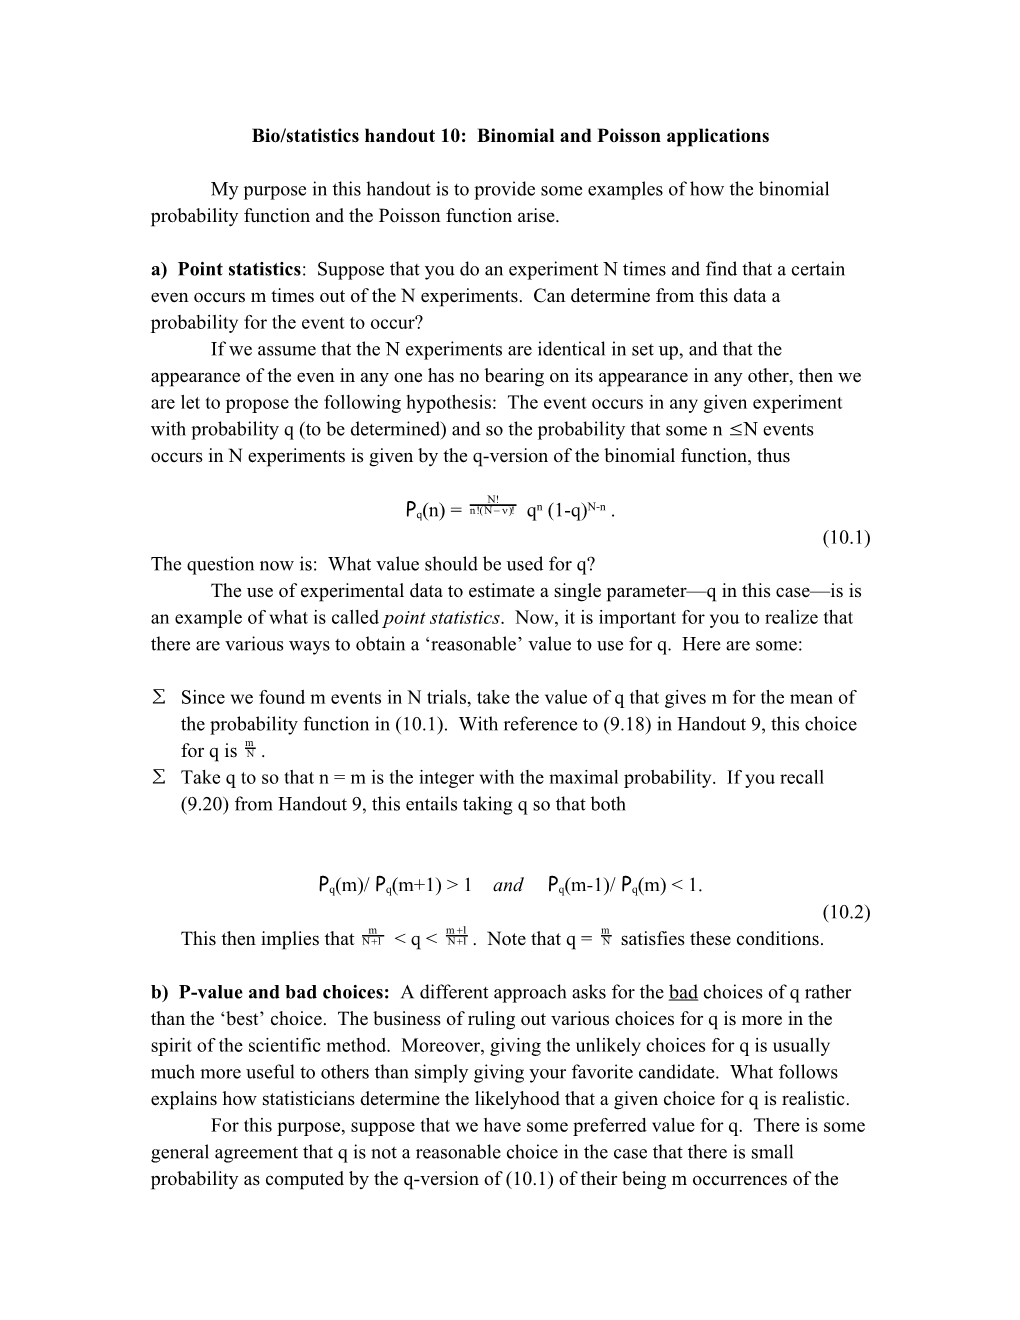 Bio/Statistics Handout 10: Binomial and Poisson Applications